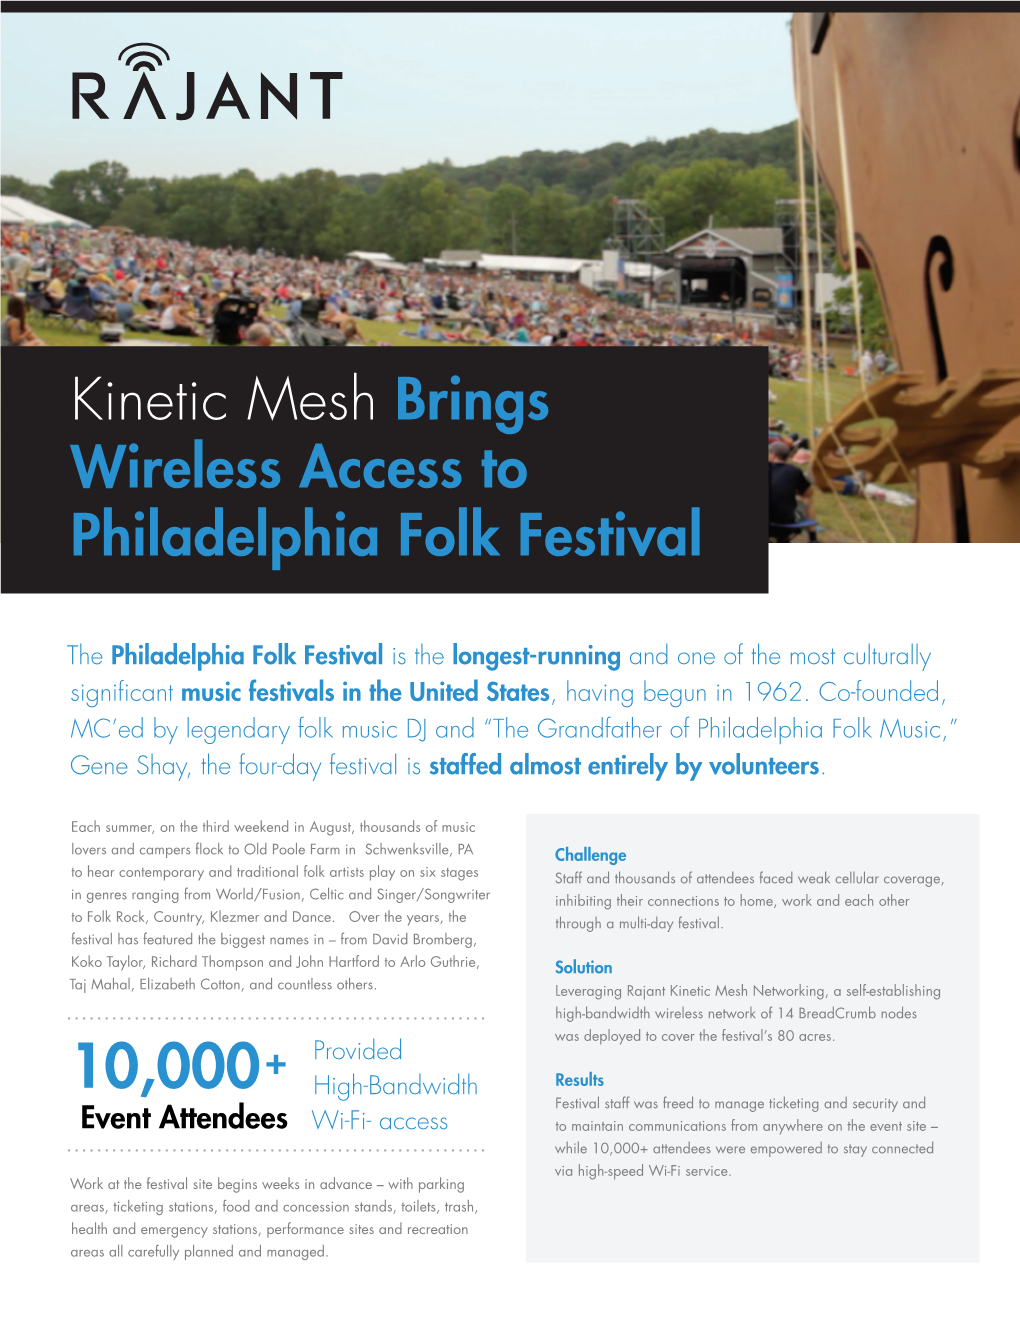 Kinetic Mesh Brings Wireless Access to Philadelphia Folk Festival